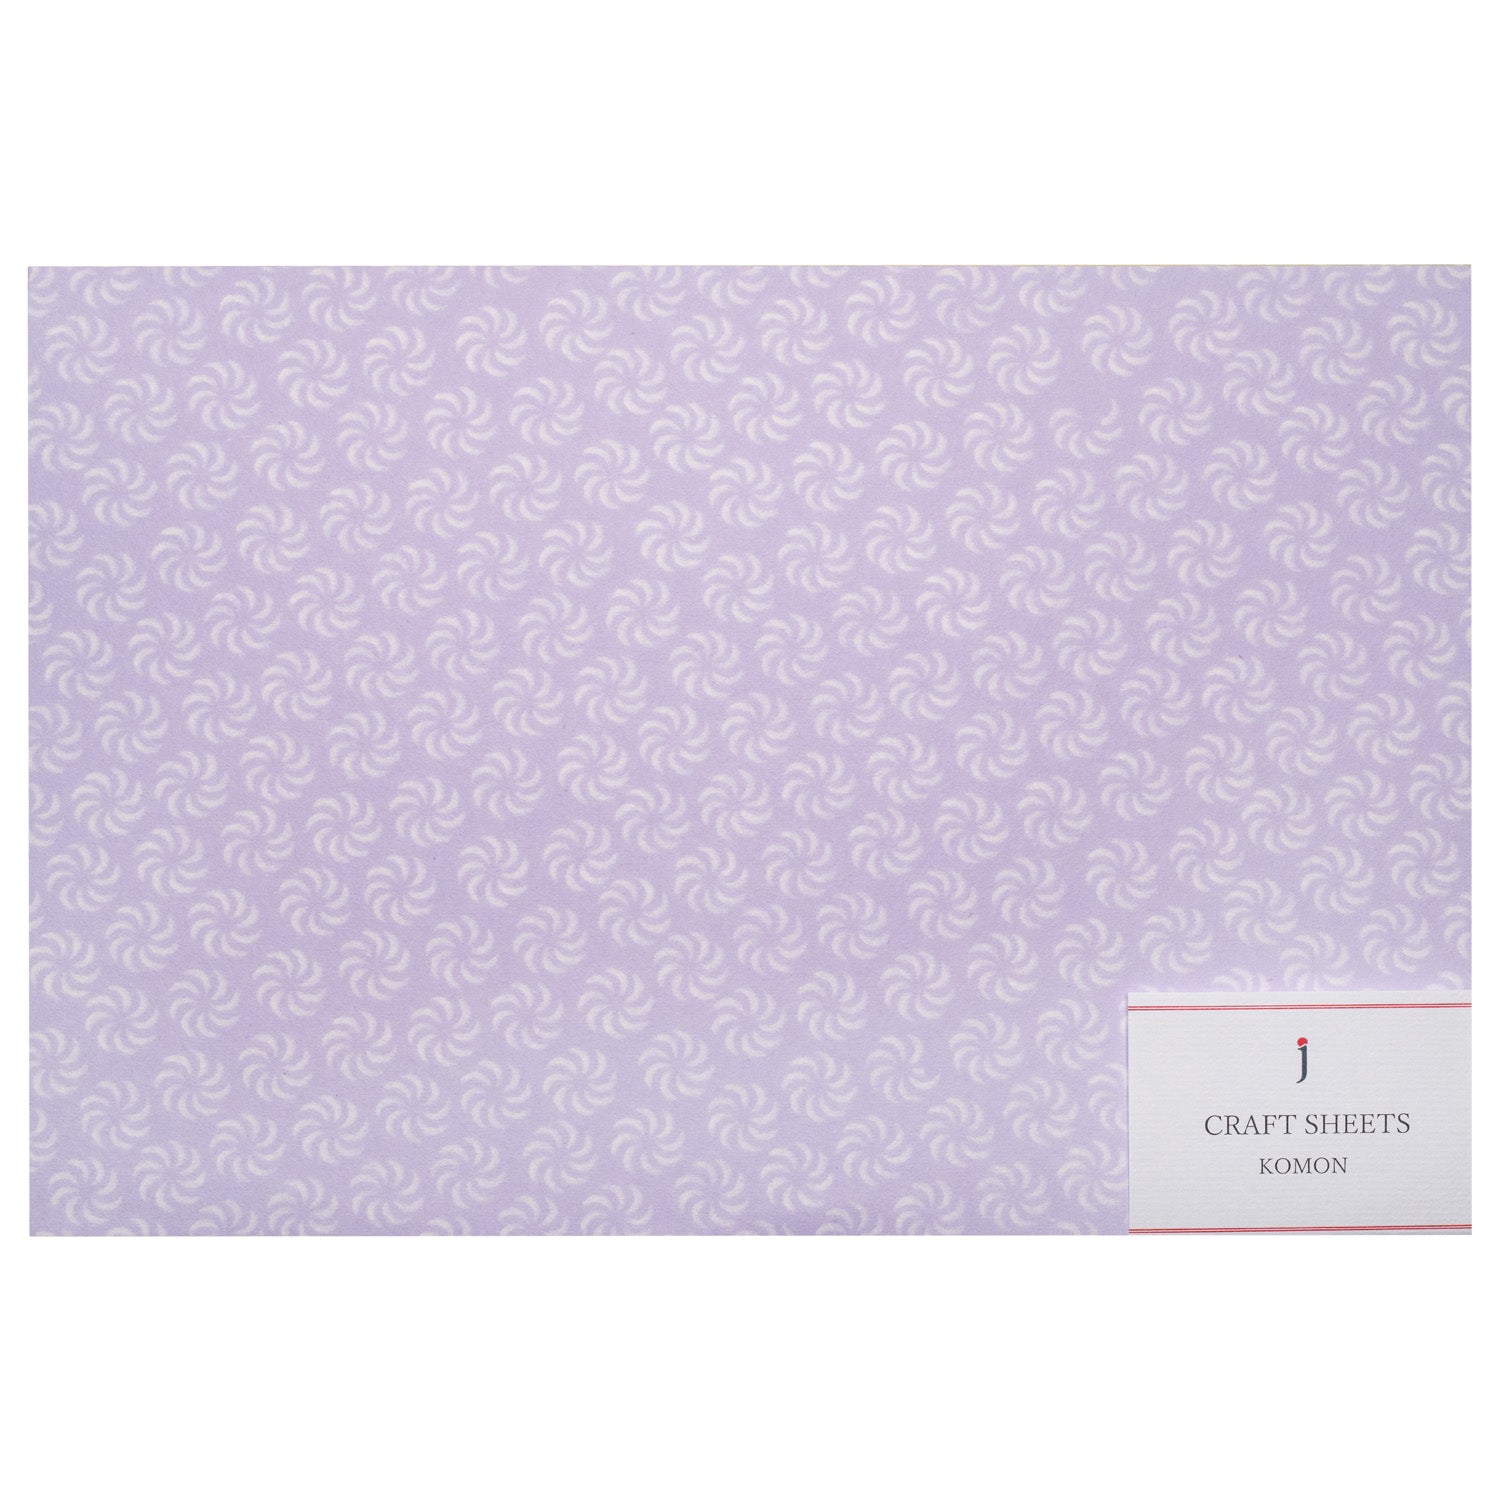 Komon Craft Sheets Pack 6 Echizen Washi Paper and label